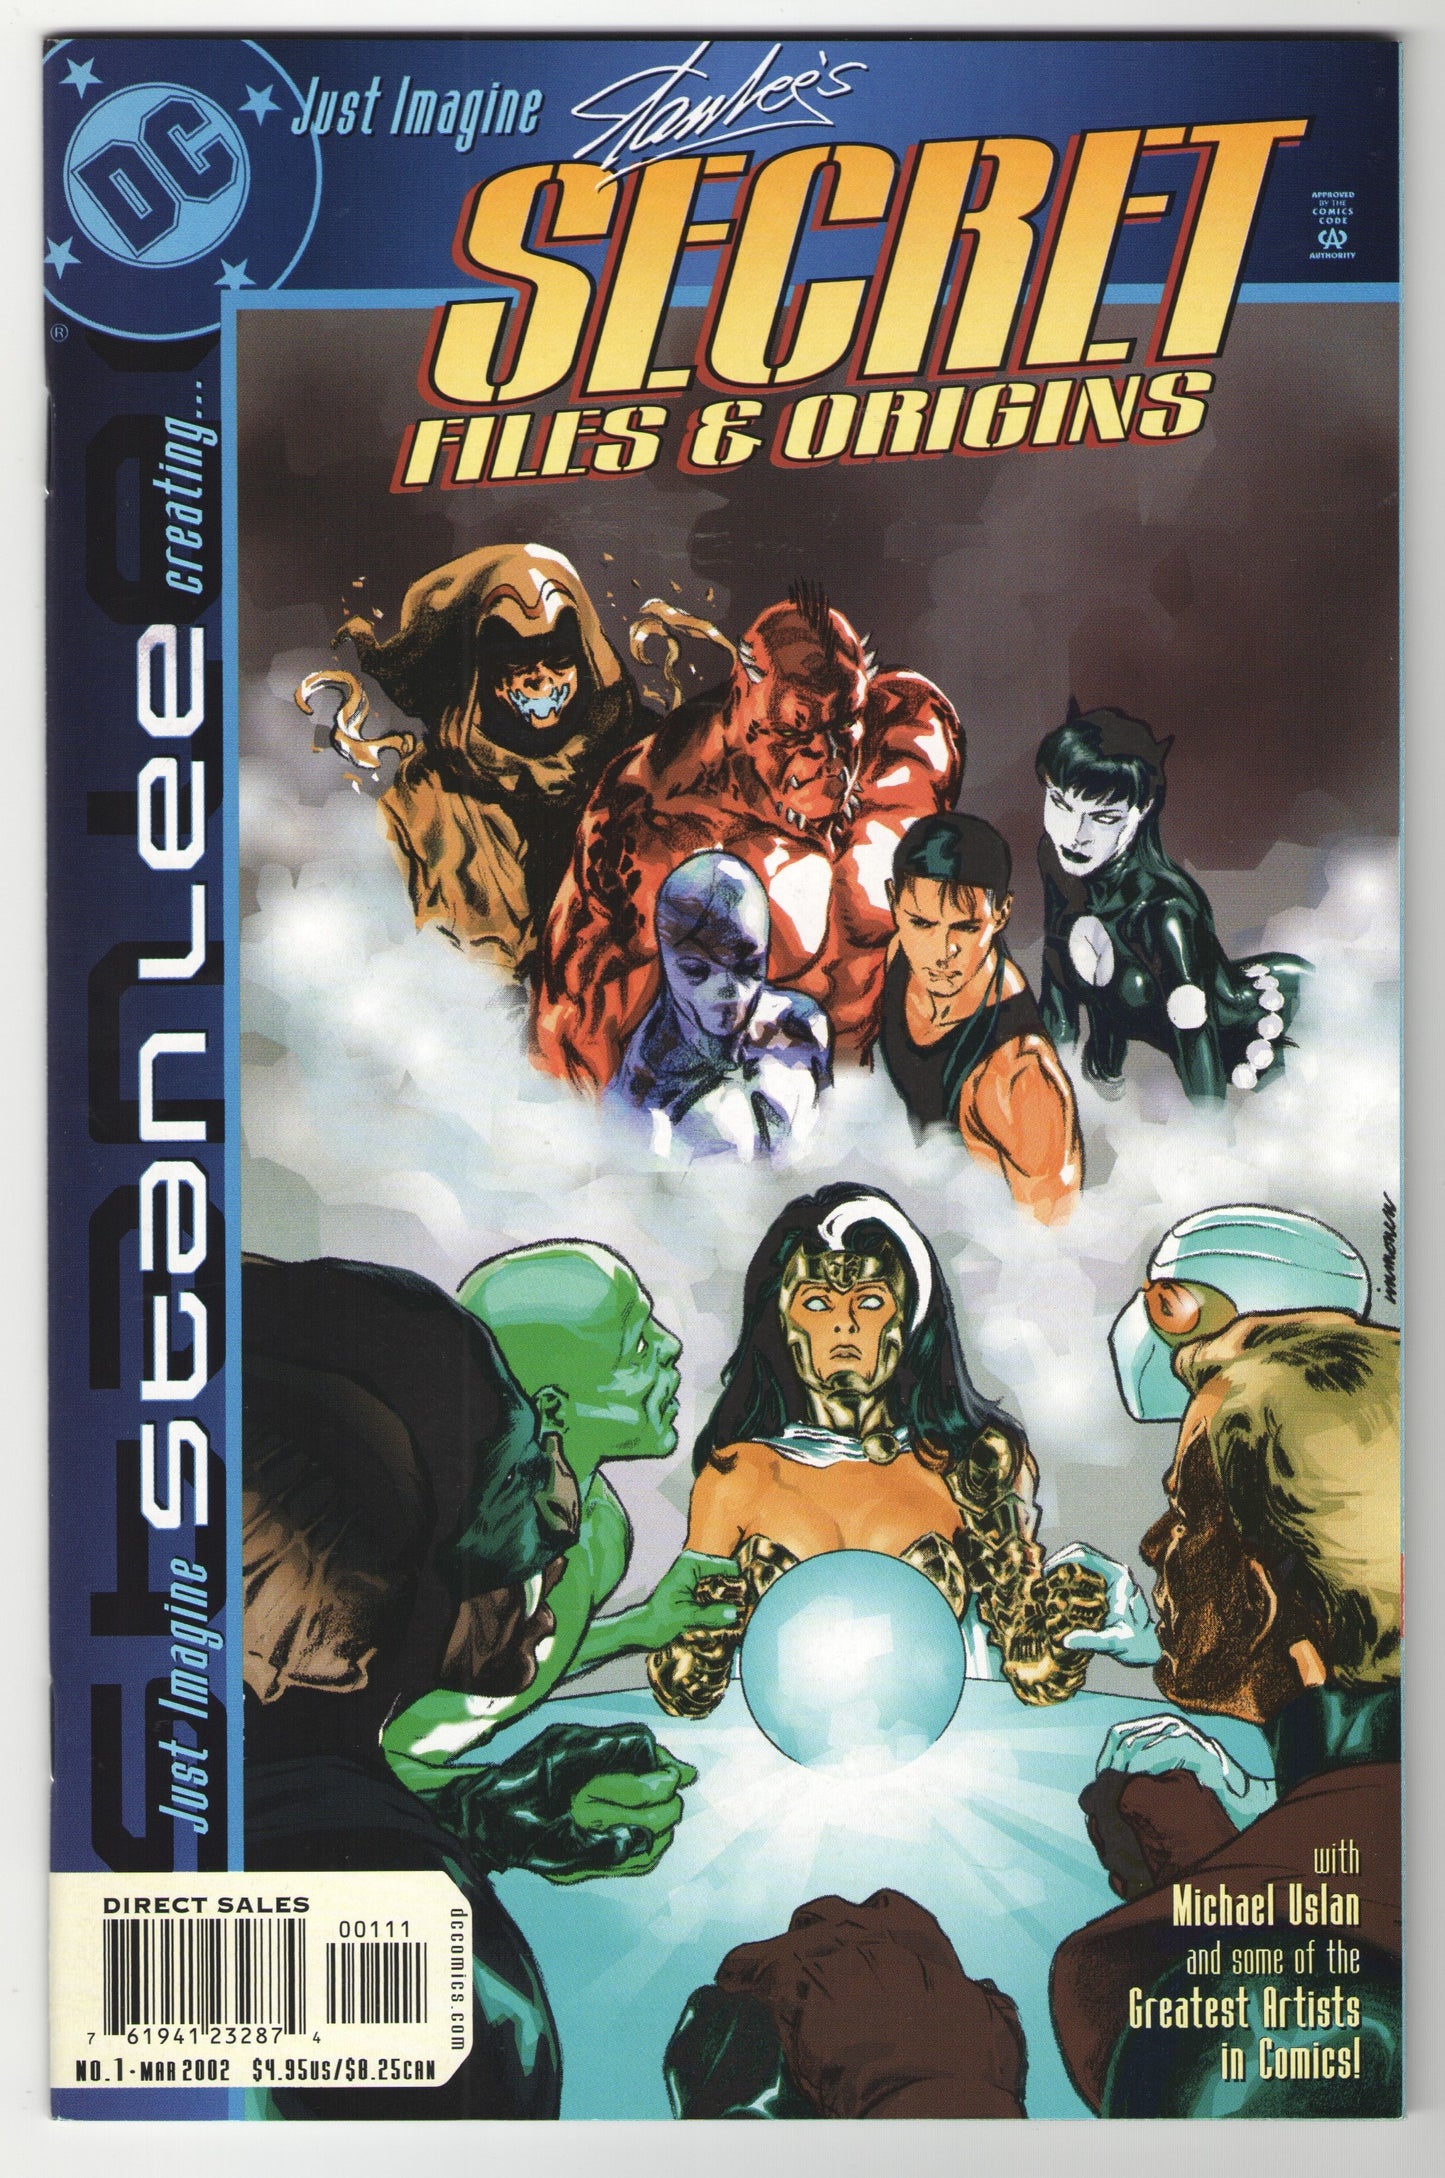 Just Imagine Stan Lee DC Universe One-Shots (2001-2002) 12-Issue Bundle